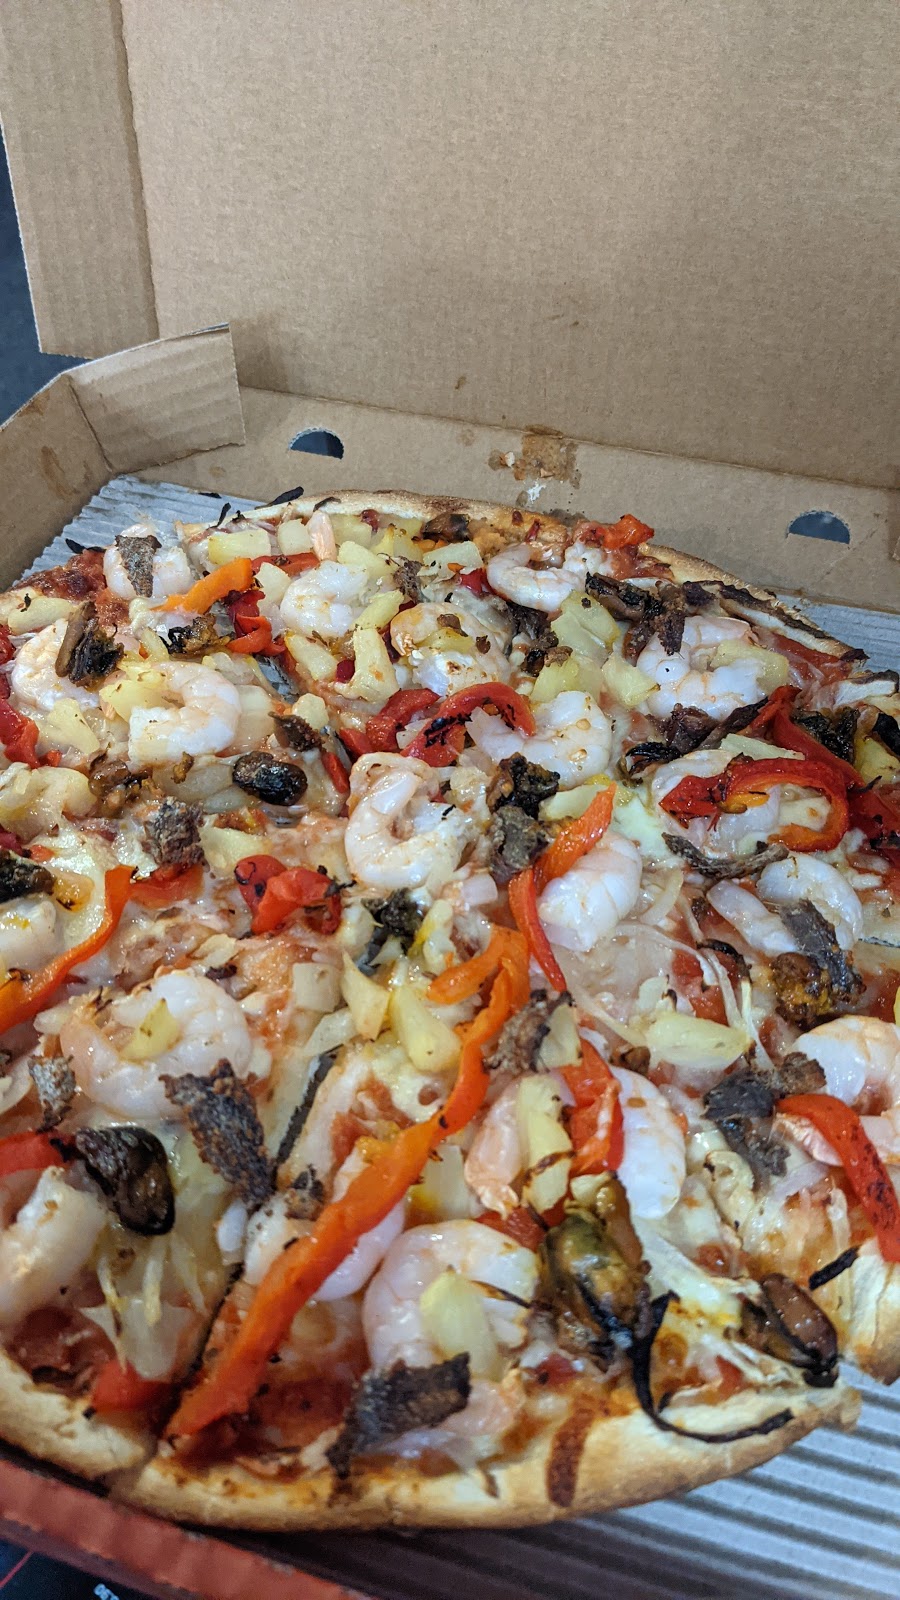 Samarelli Pizzas N More | 65 Kesters Rd, Para Hills West SA 5096, Australia | Phone: (08) 8359 4889